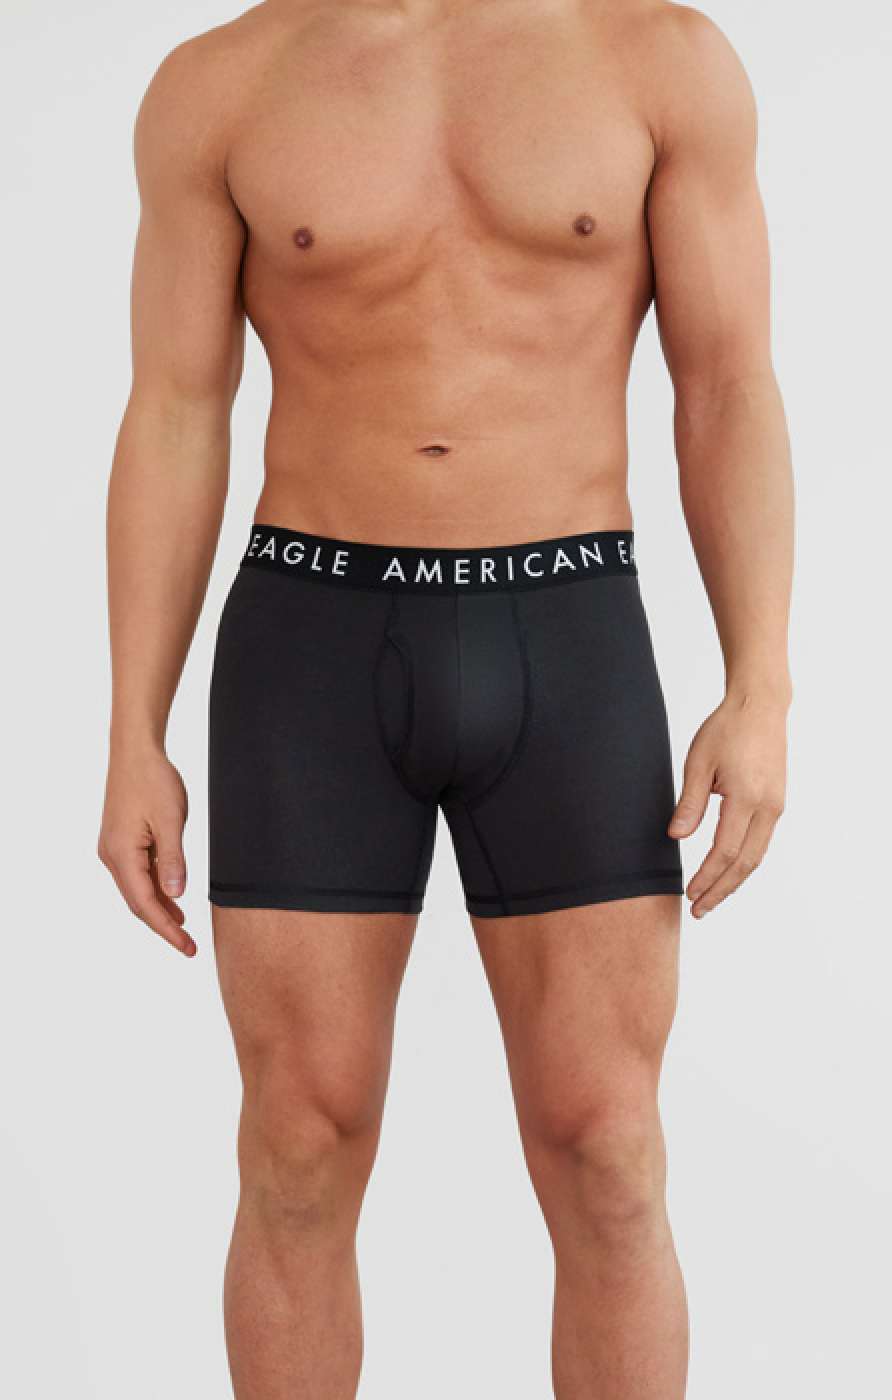 Men's Boxer Briefs, Men's Underwear